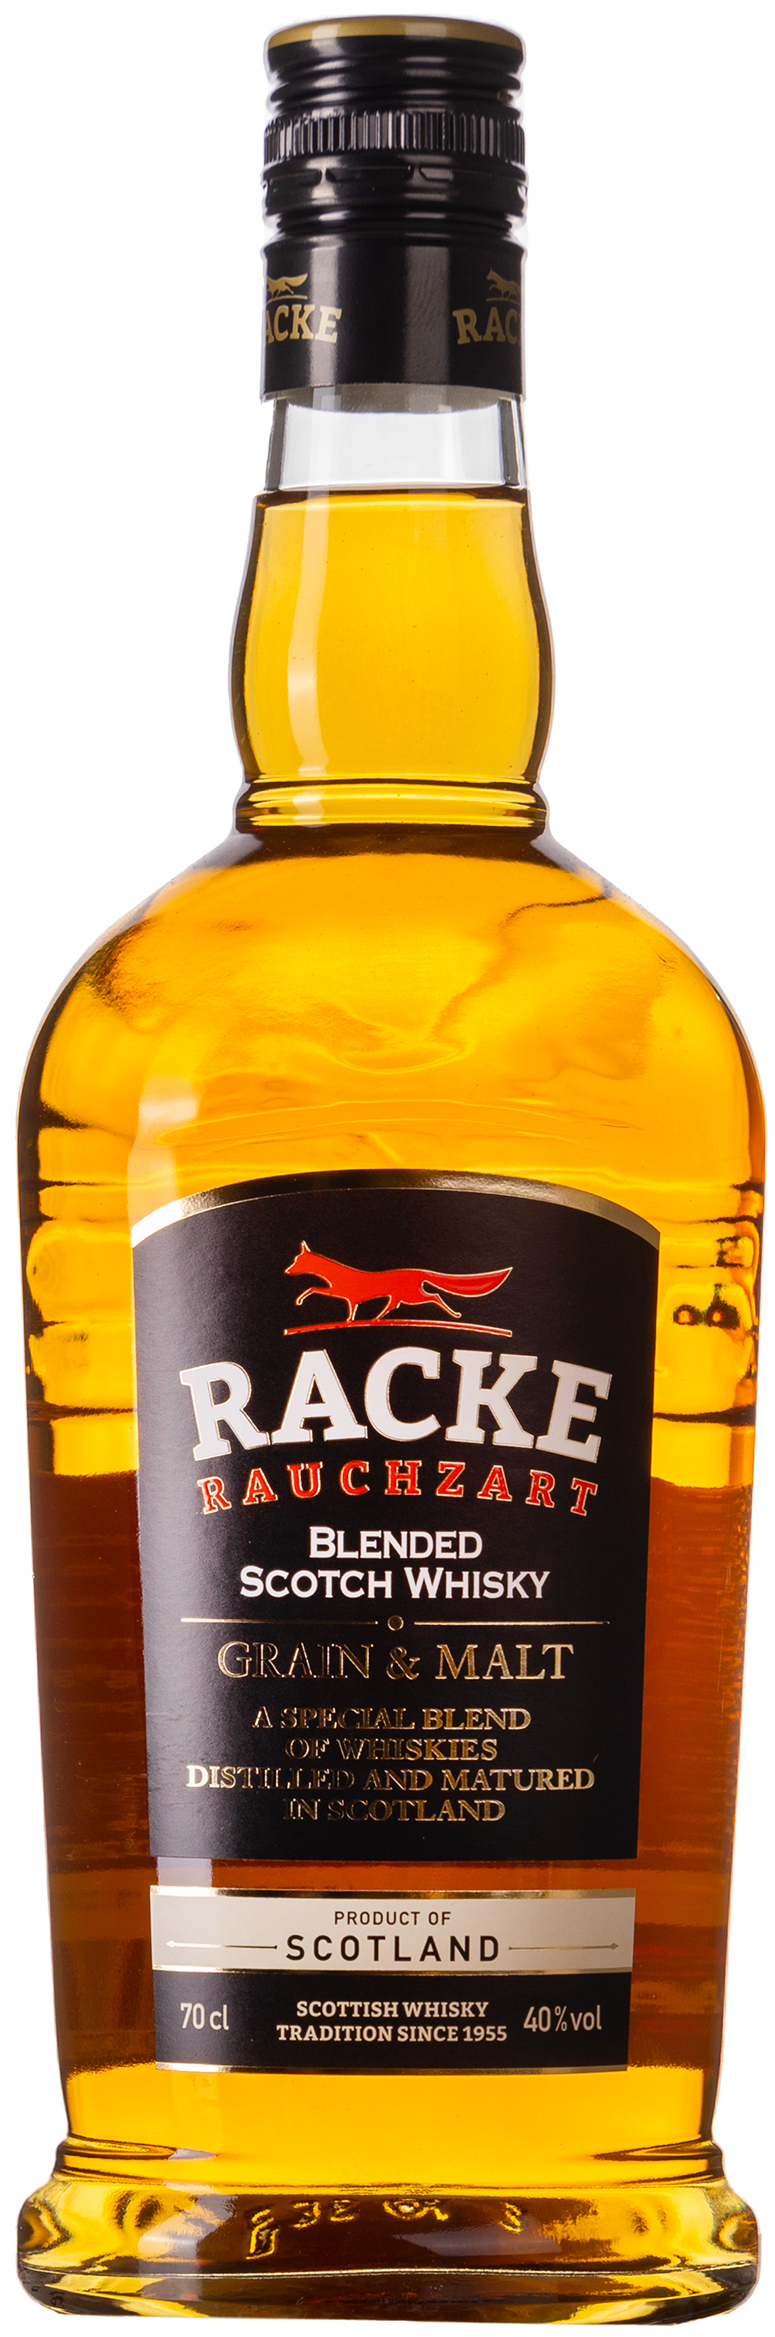 Racke Rauchzart Whisky 40% vol. 0,7L